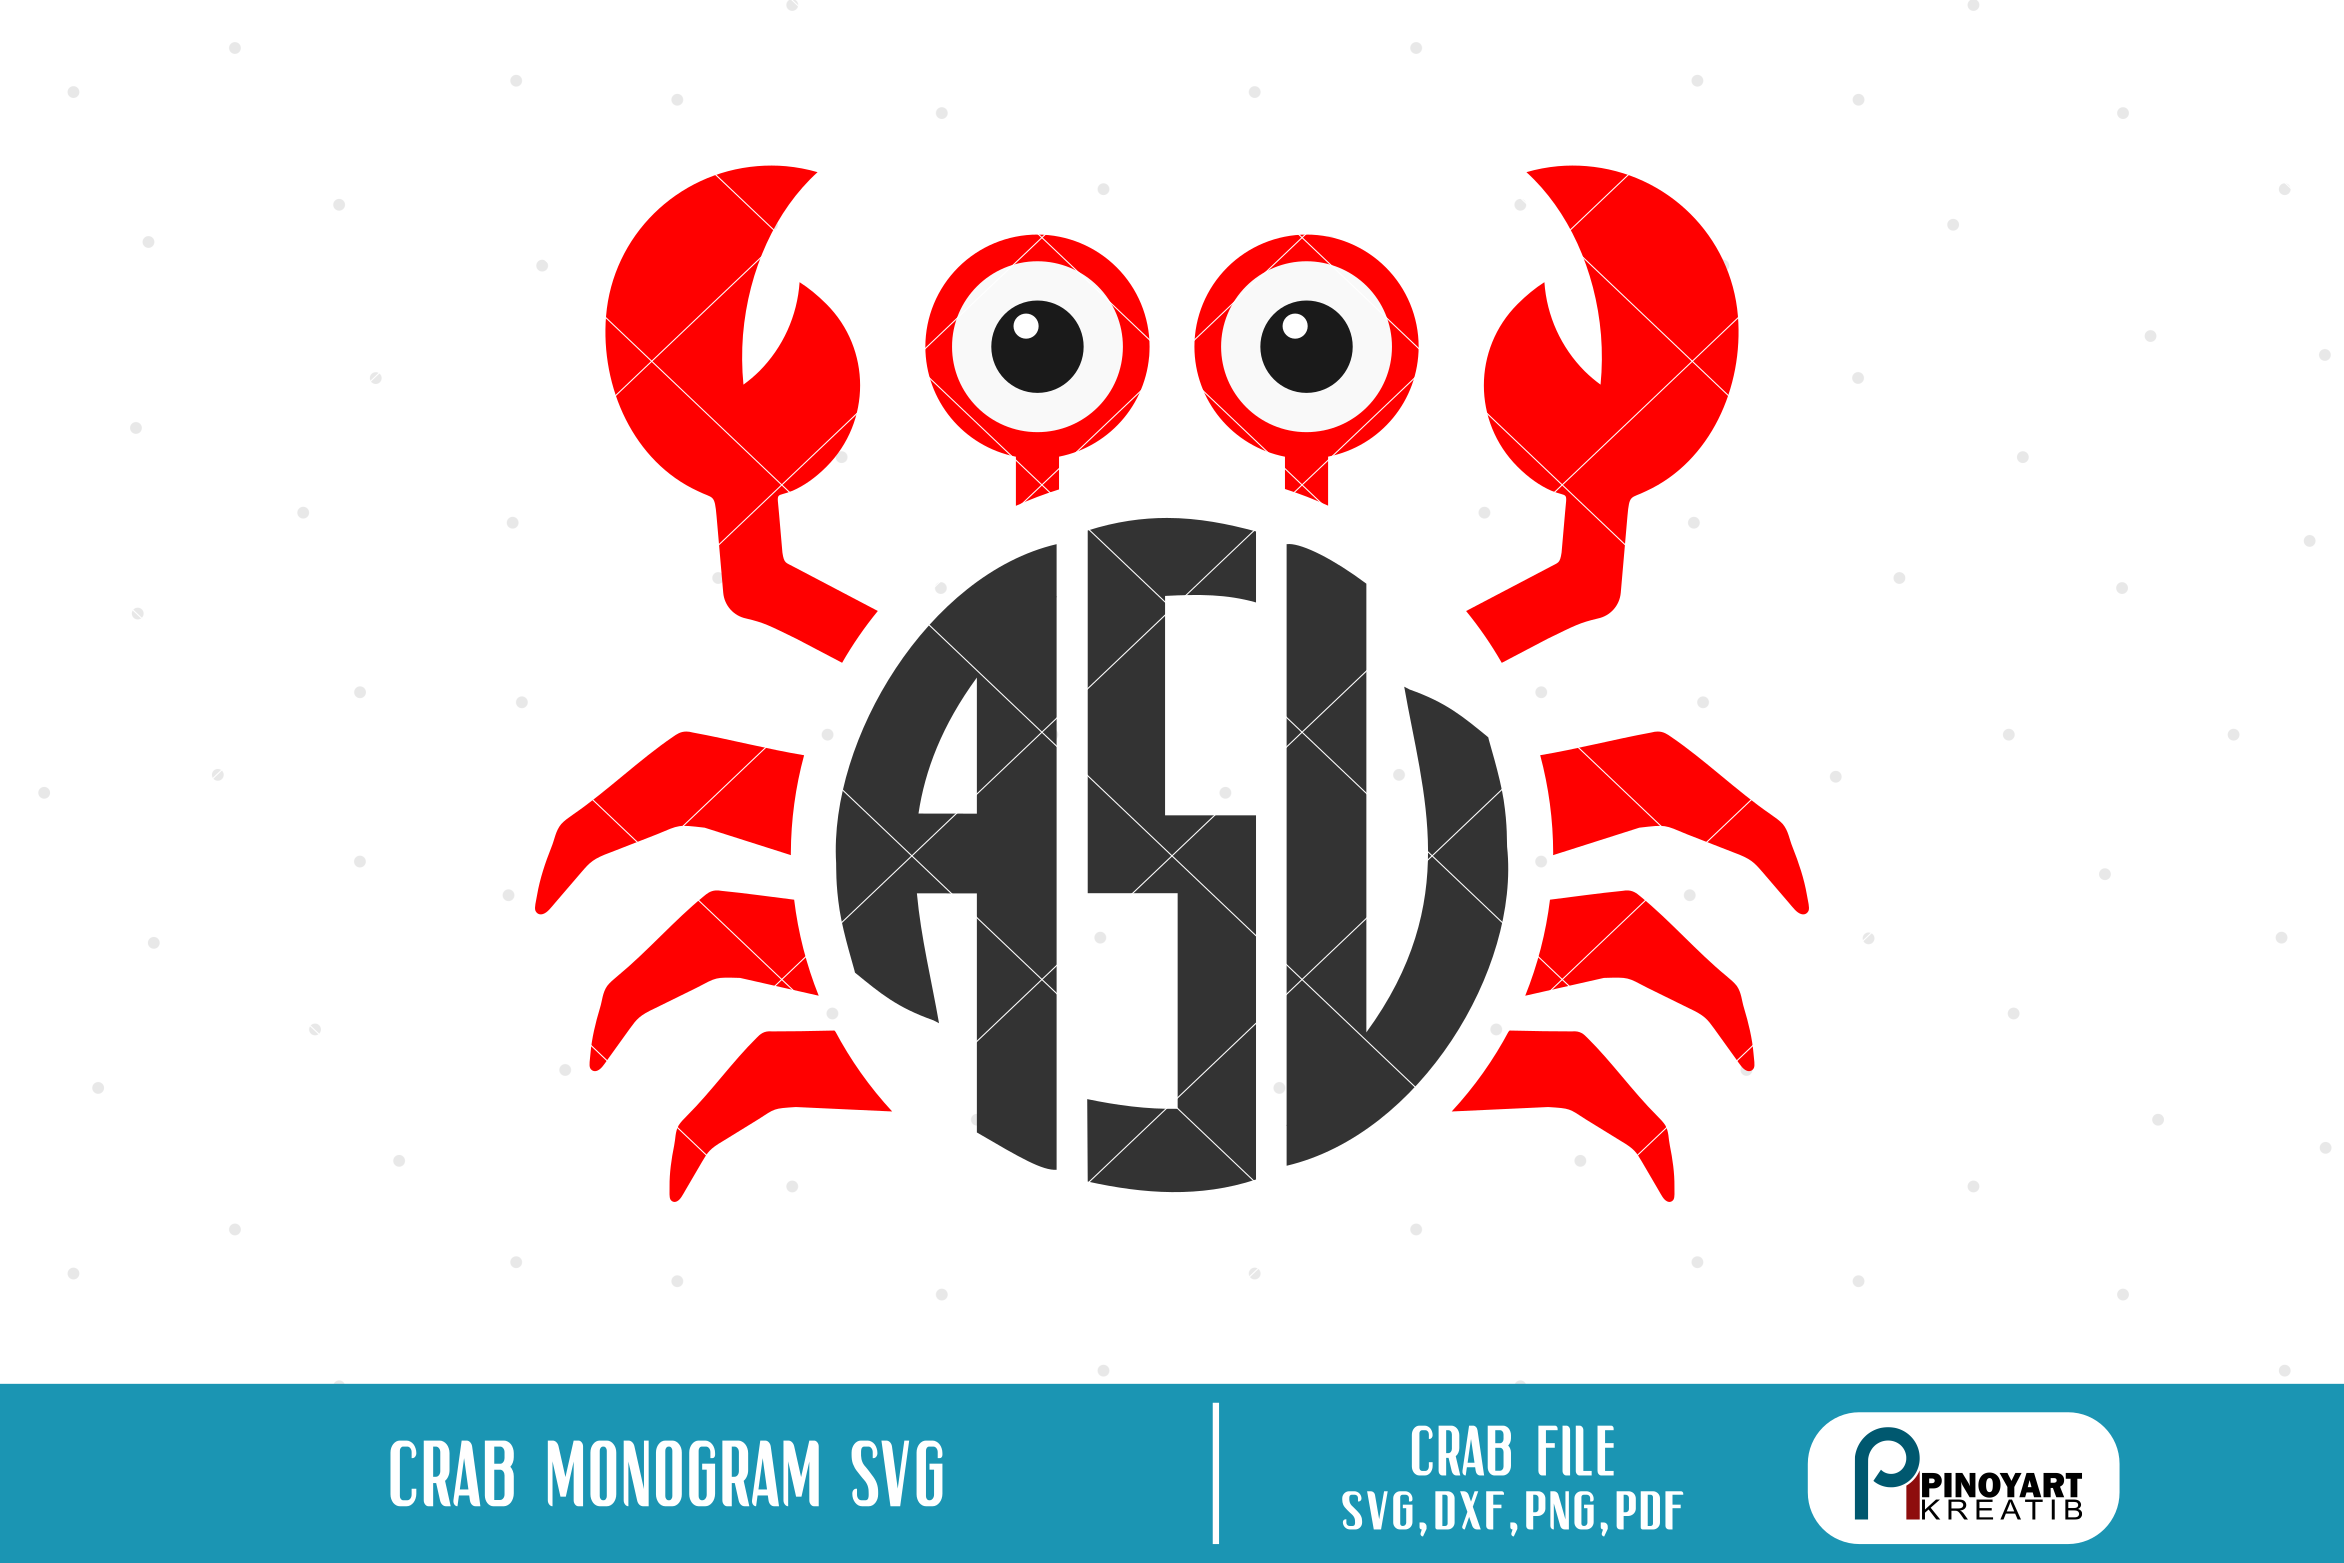 Download crab monogram svg,crab monogram,crab svg,crab svg file,crab